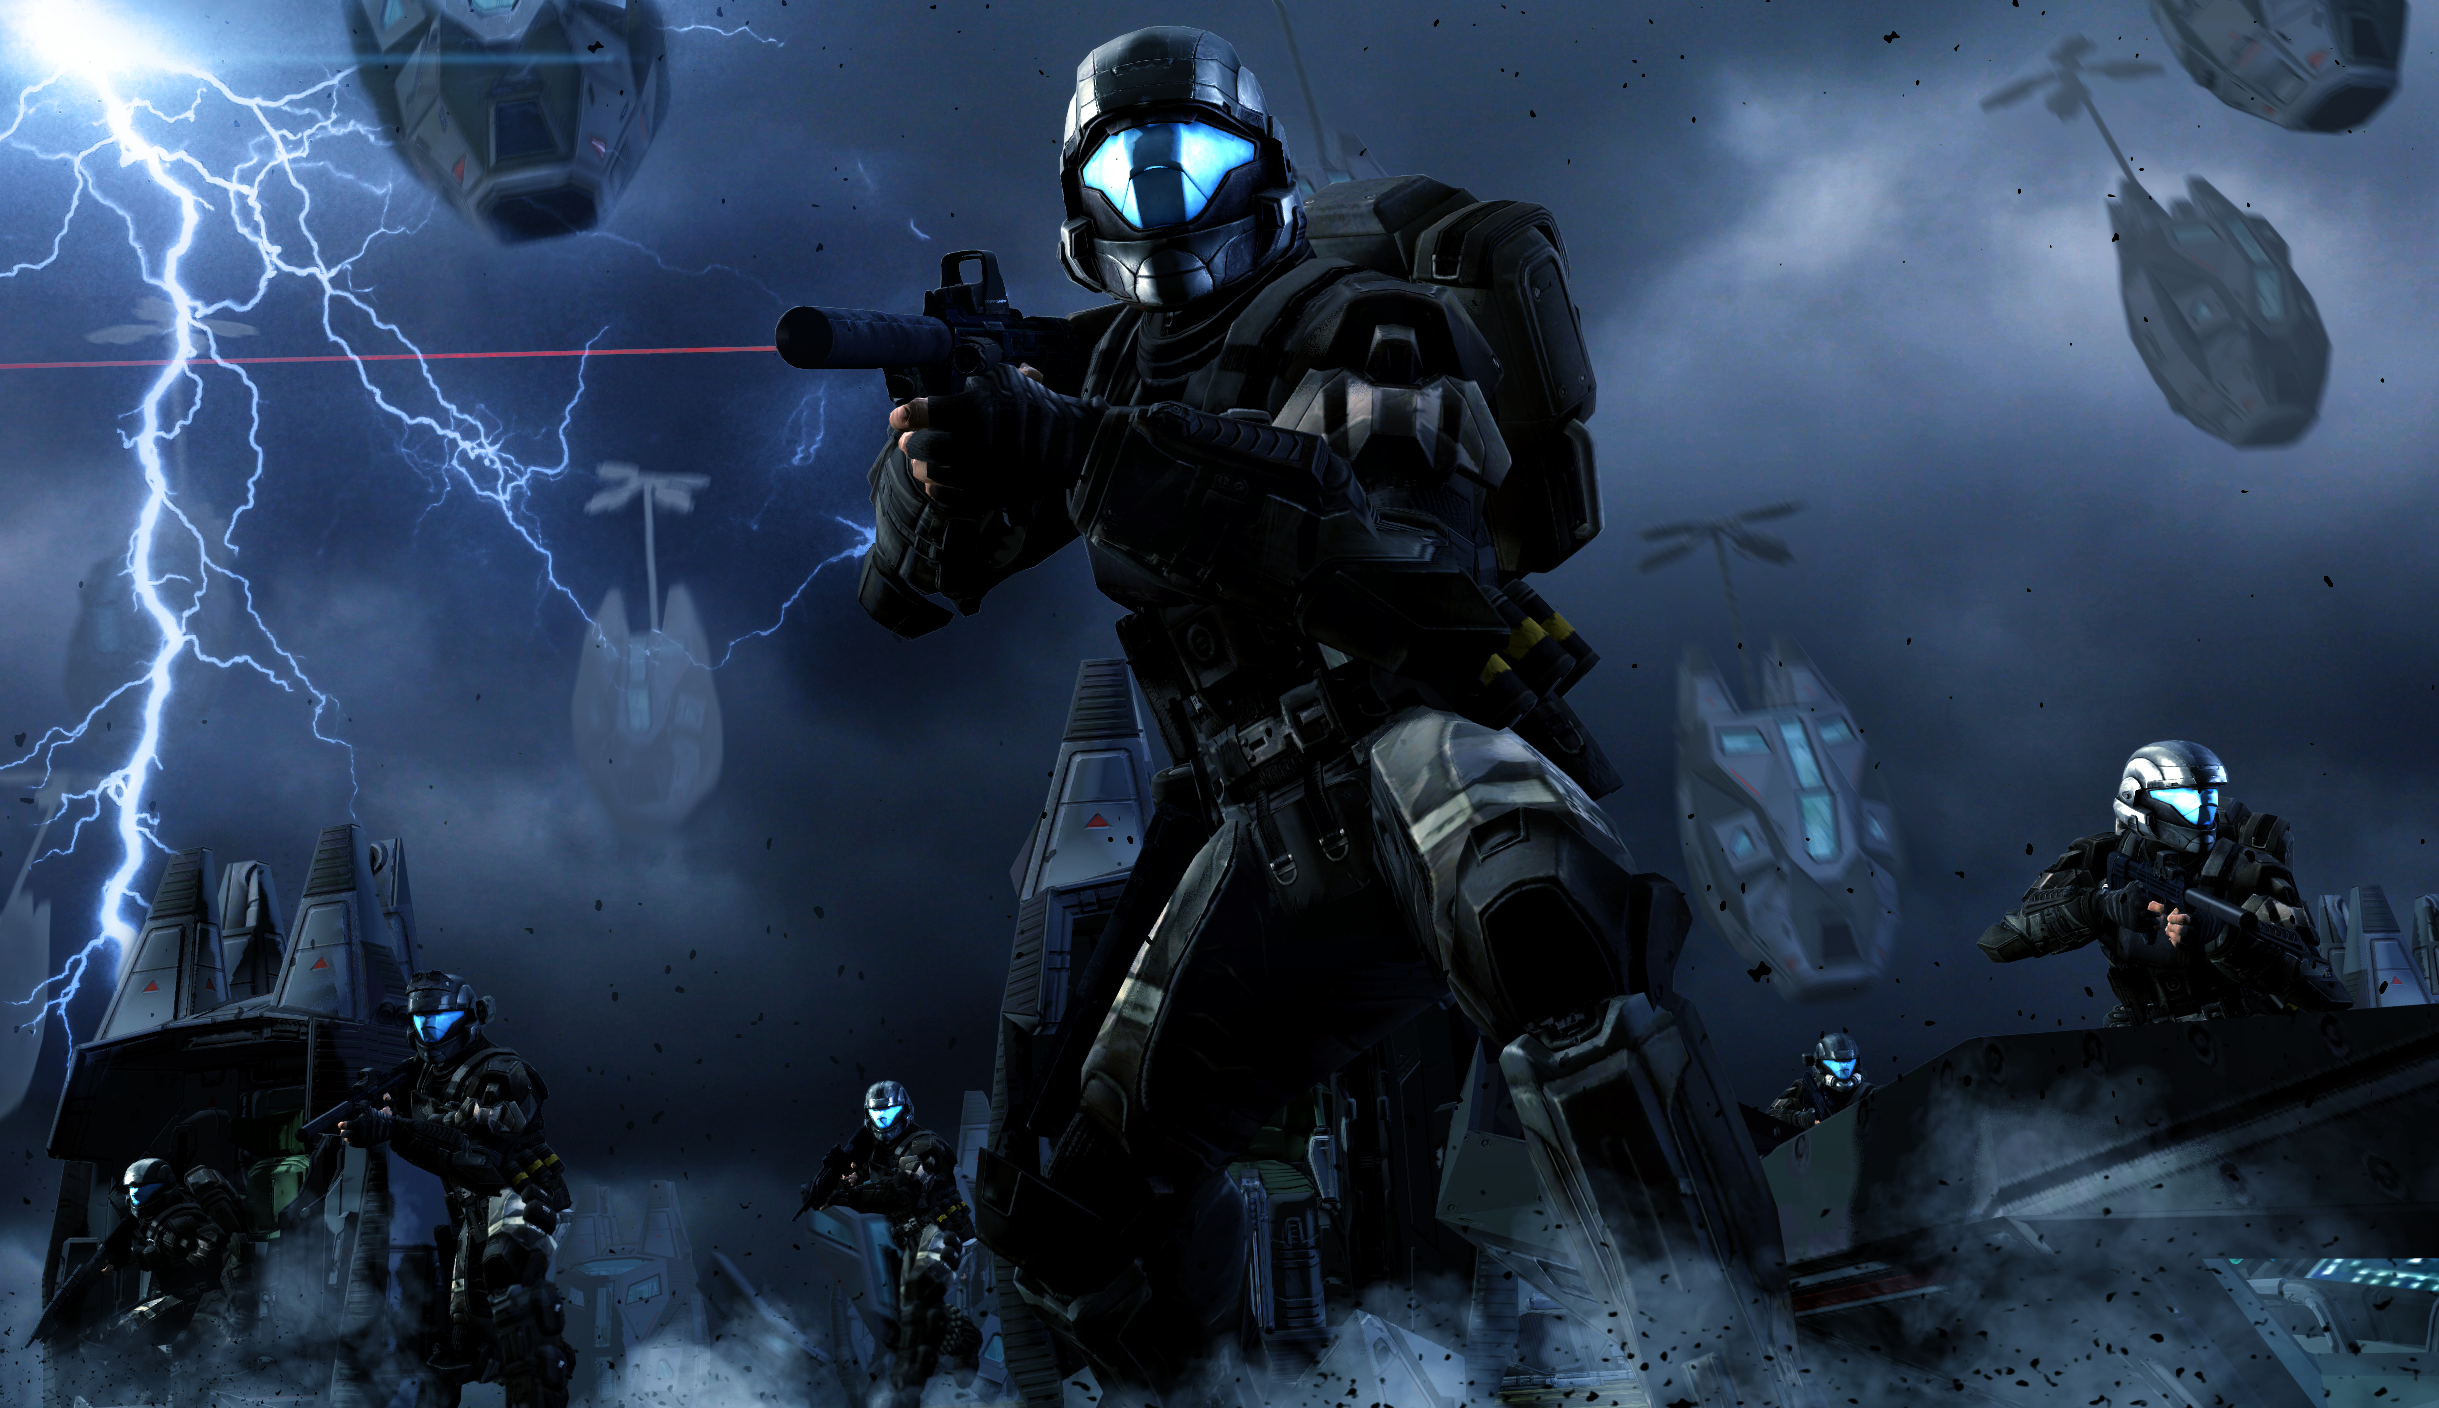 Wallpapers : video games, futuristic armor, Halo 3 ODST, submachine gun, li...